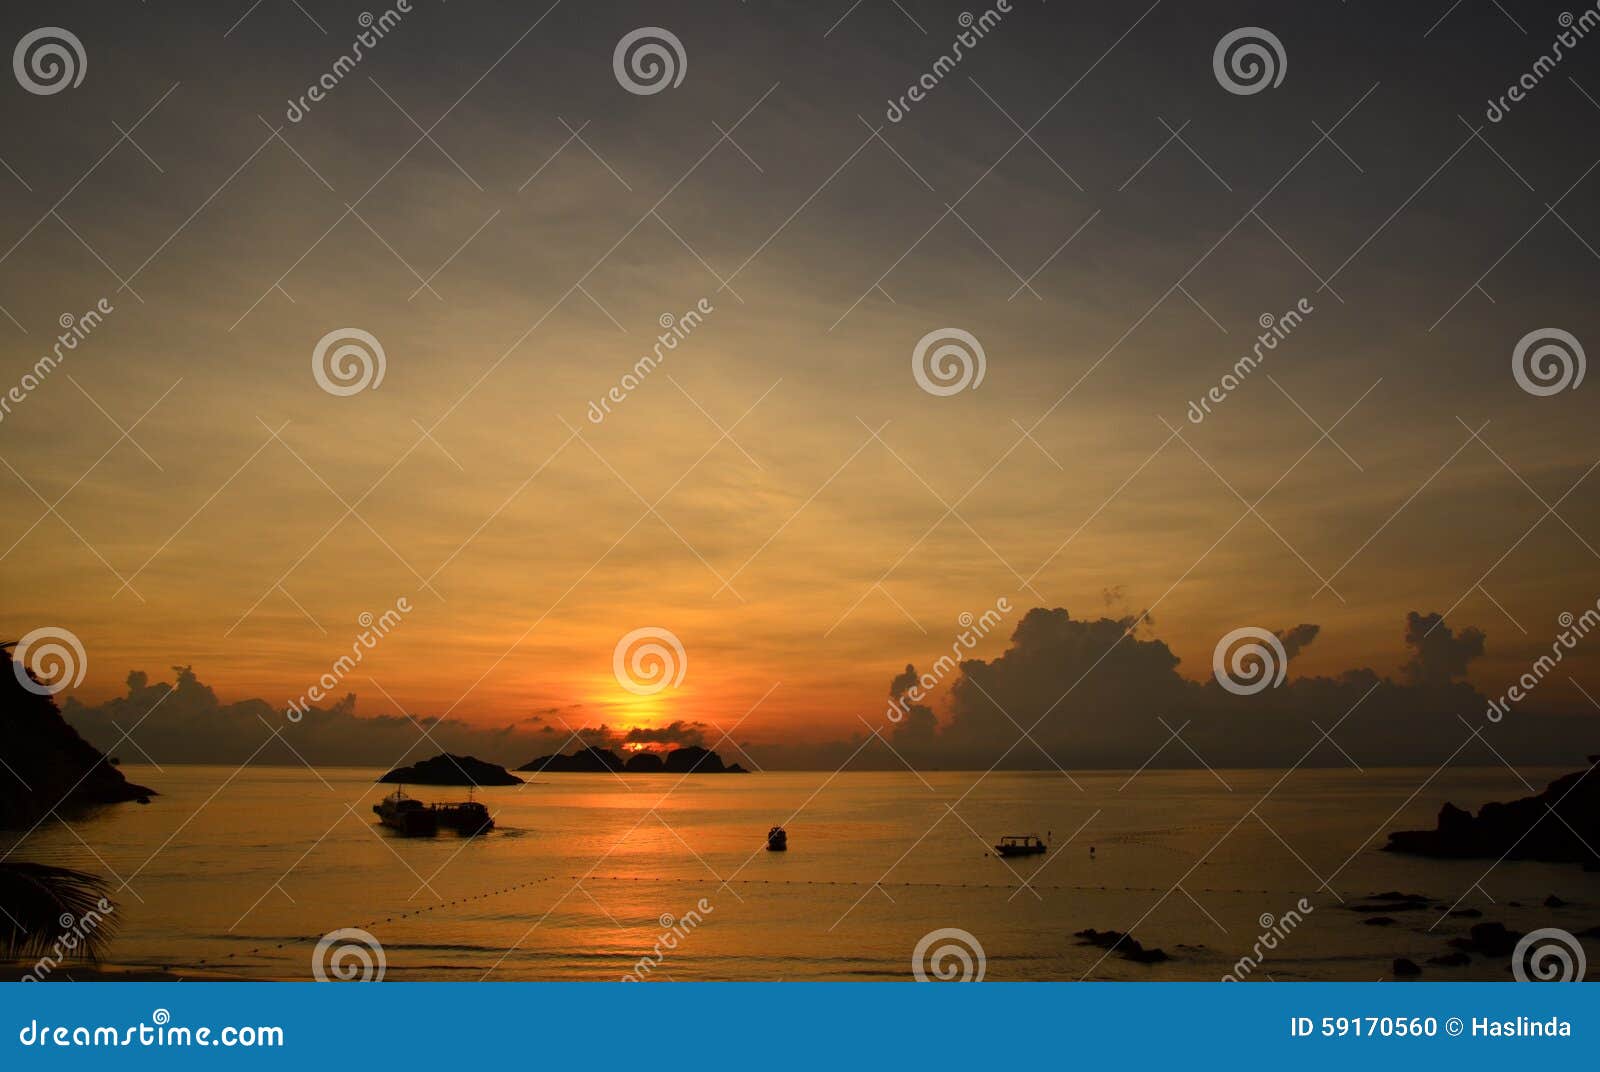 sunrise on pulau redang malaysia